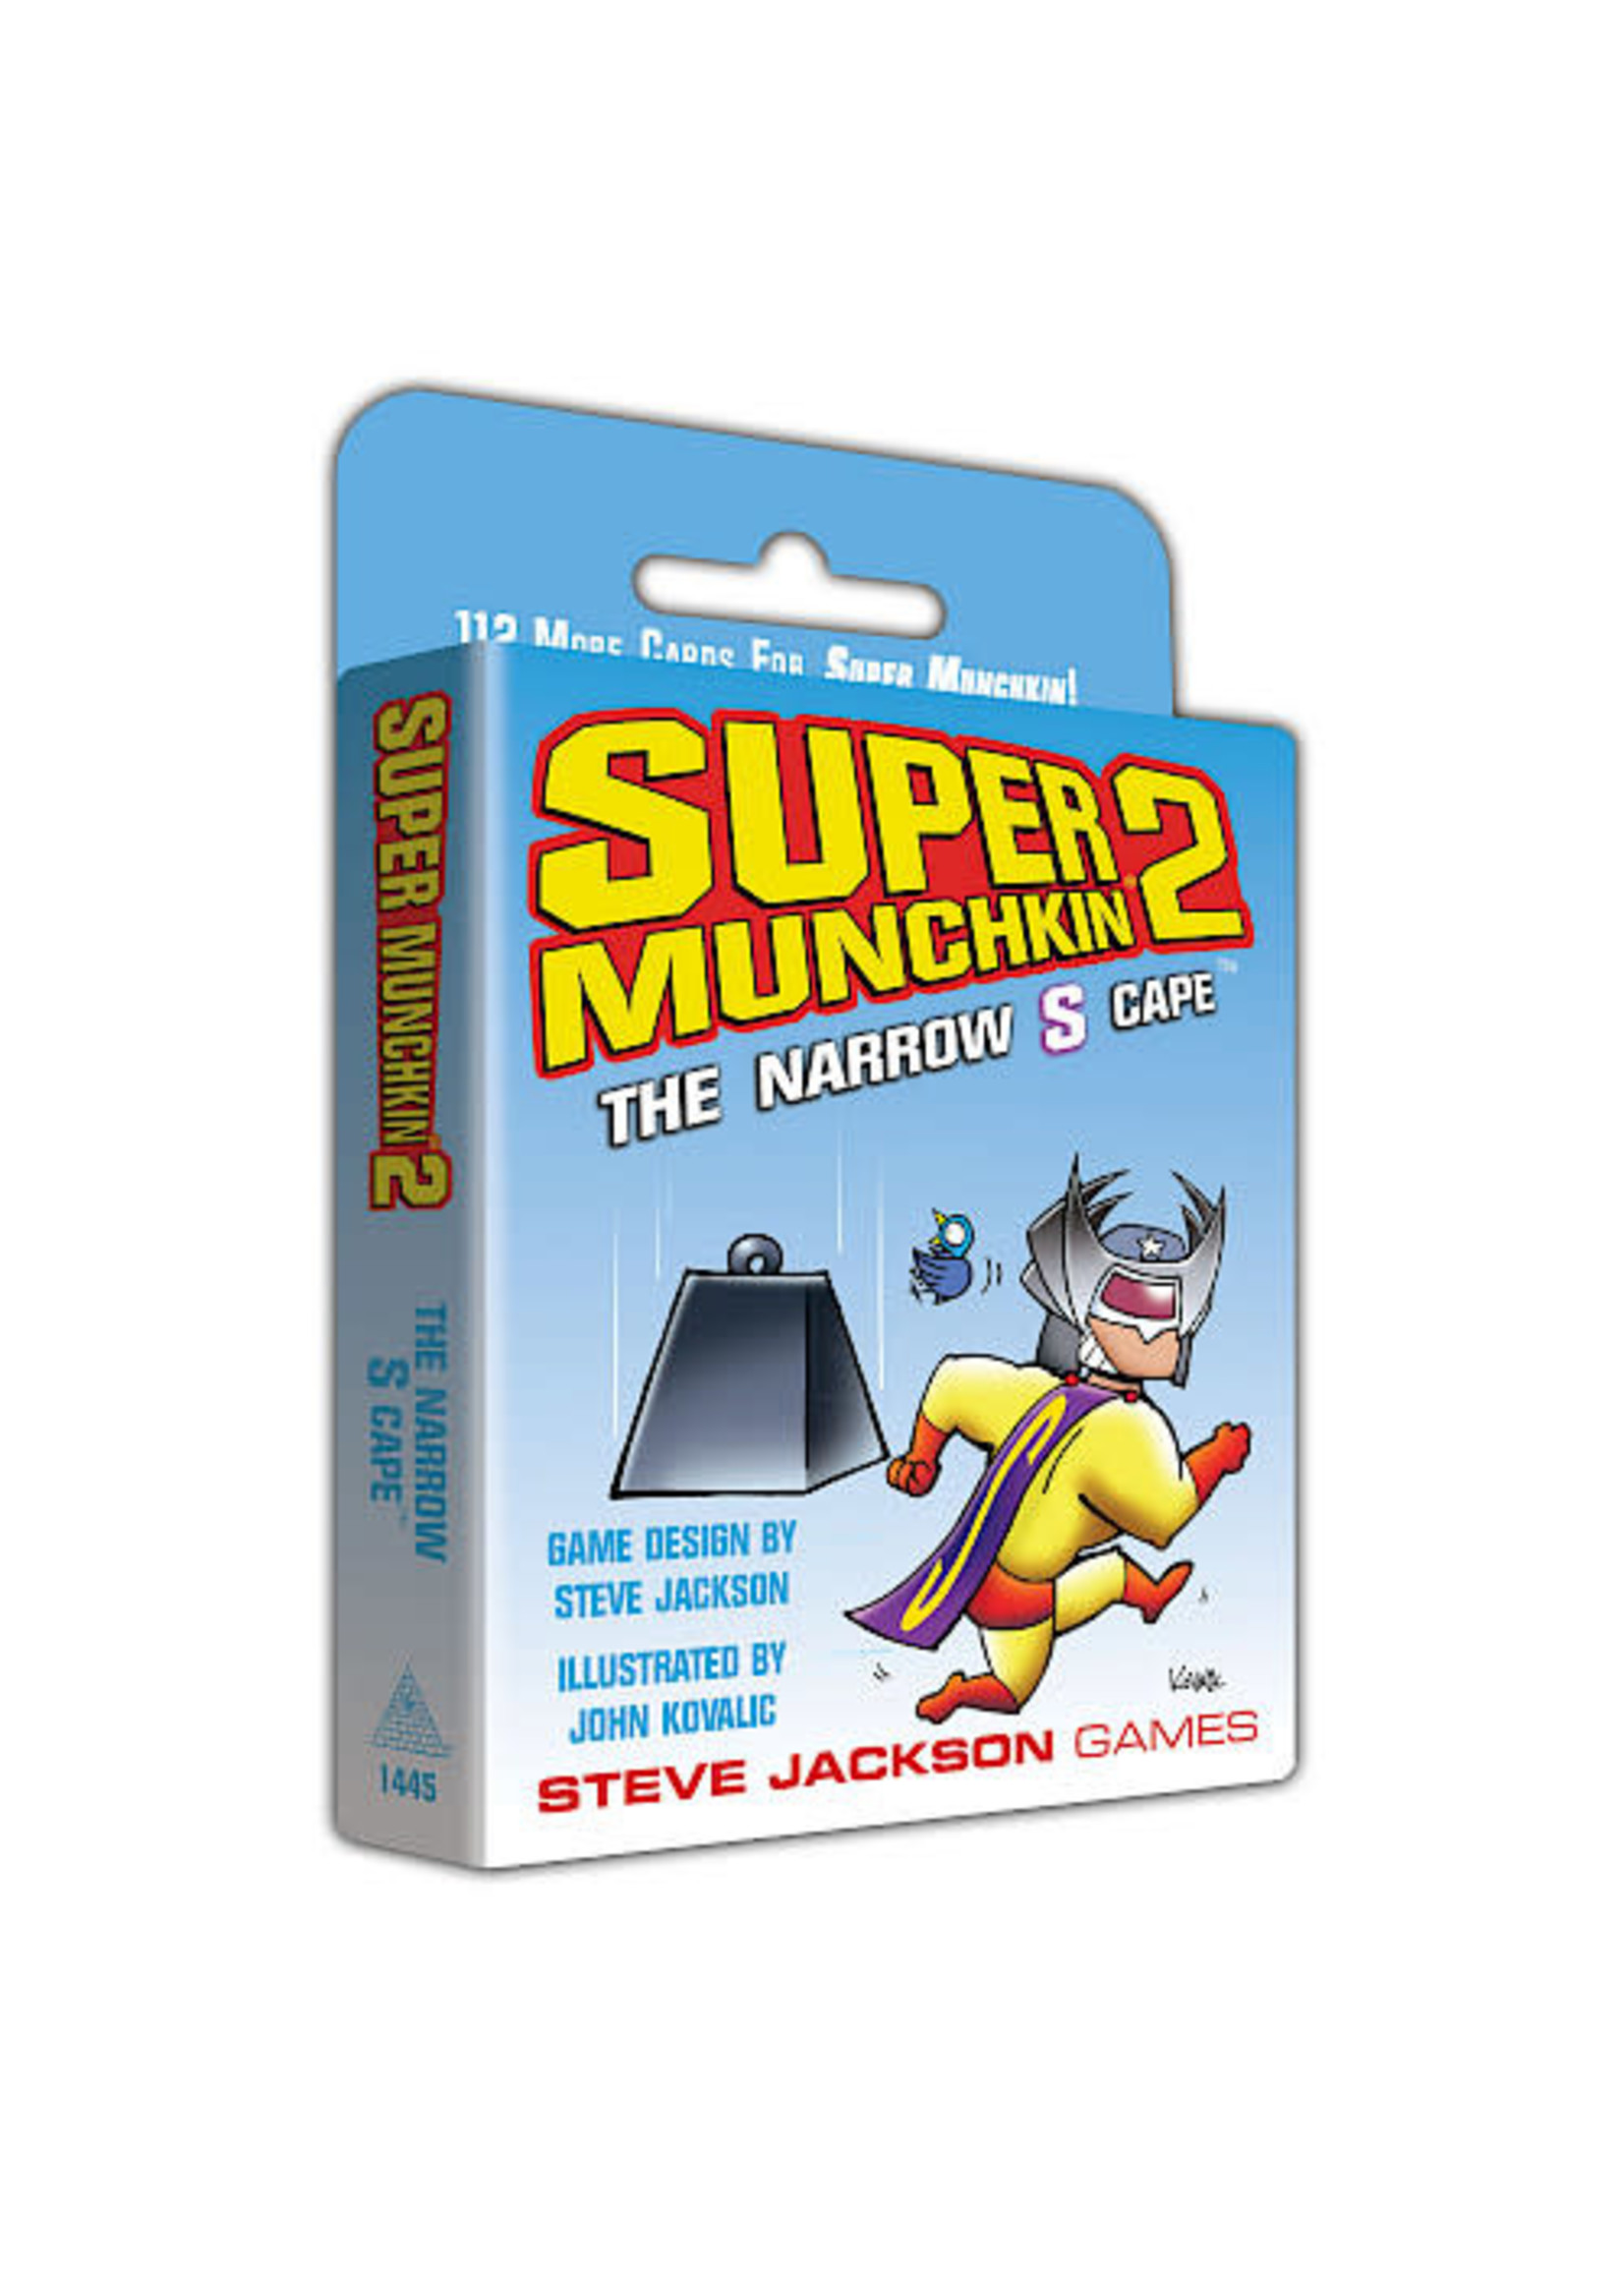 Steve Jackson Games Super Munchkin 2 — The Narrow S Cape